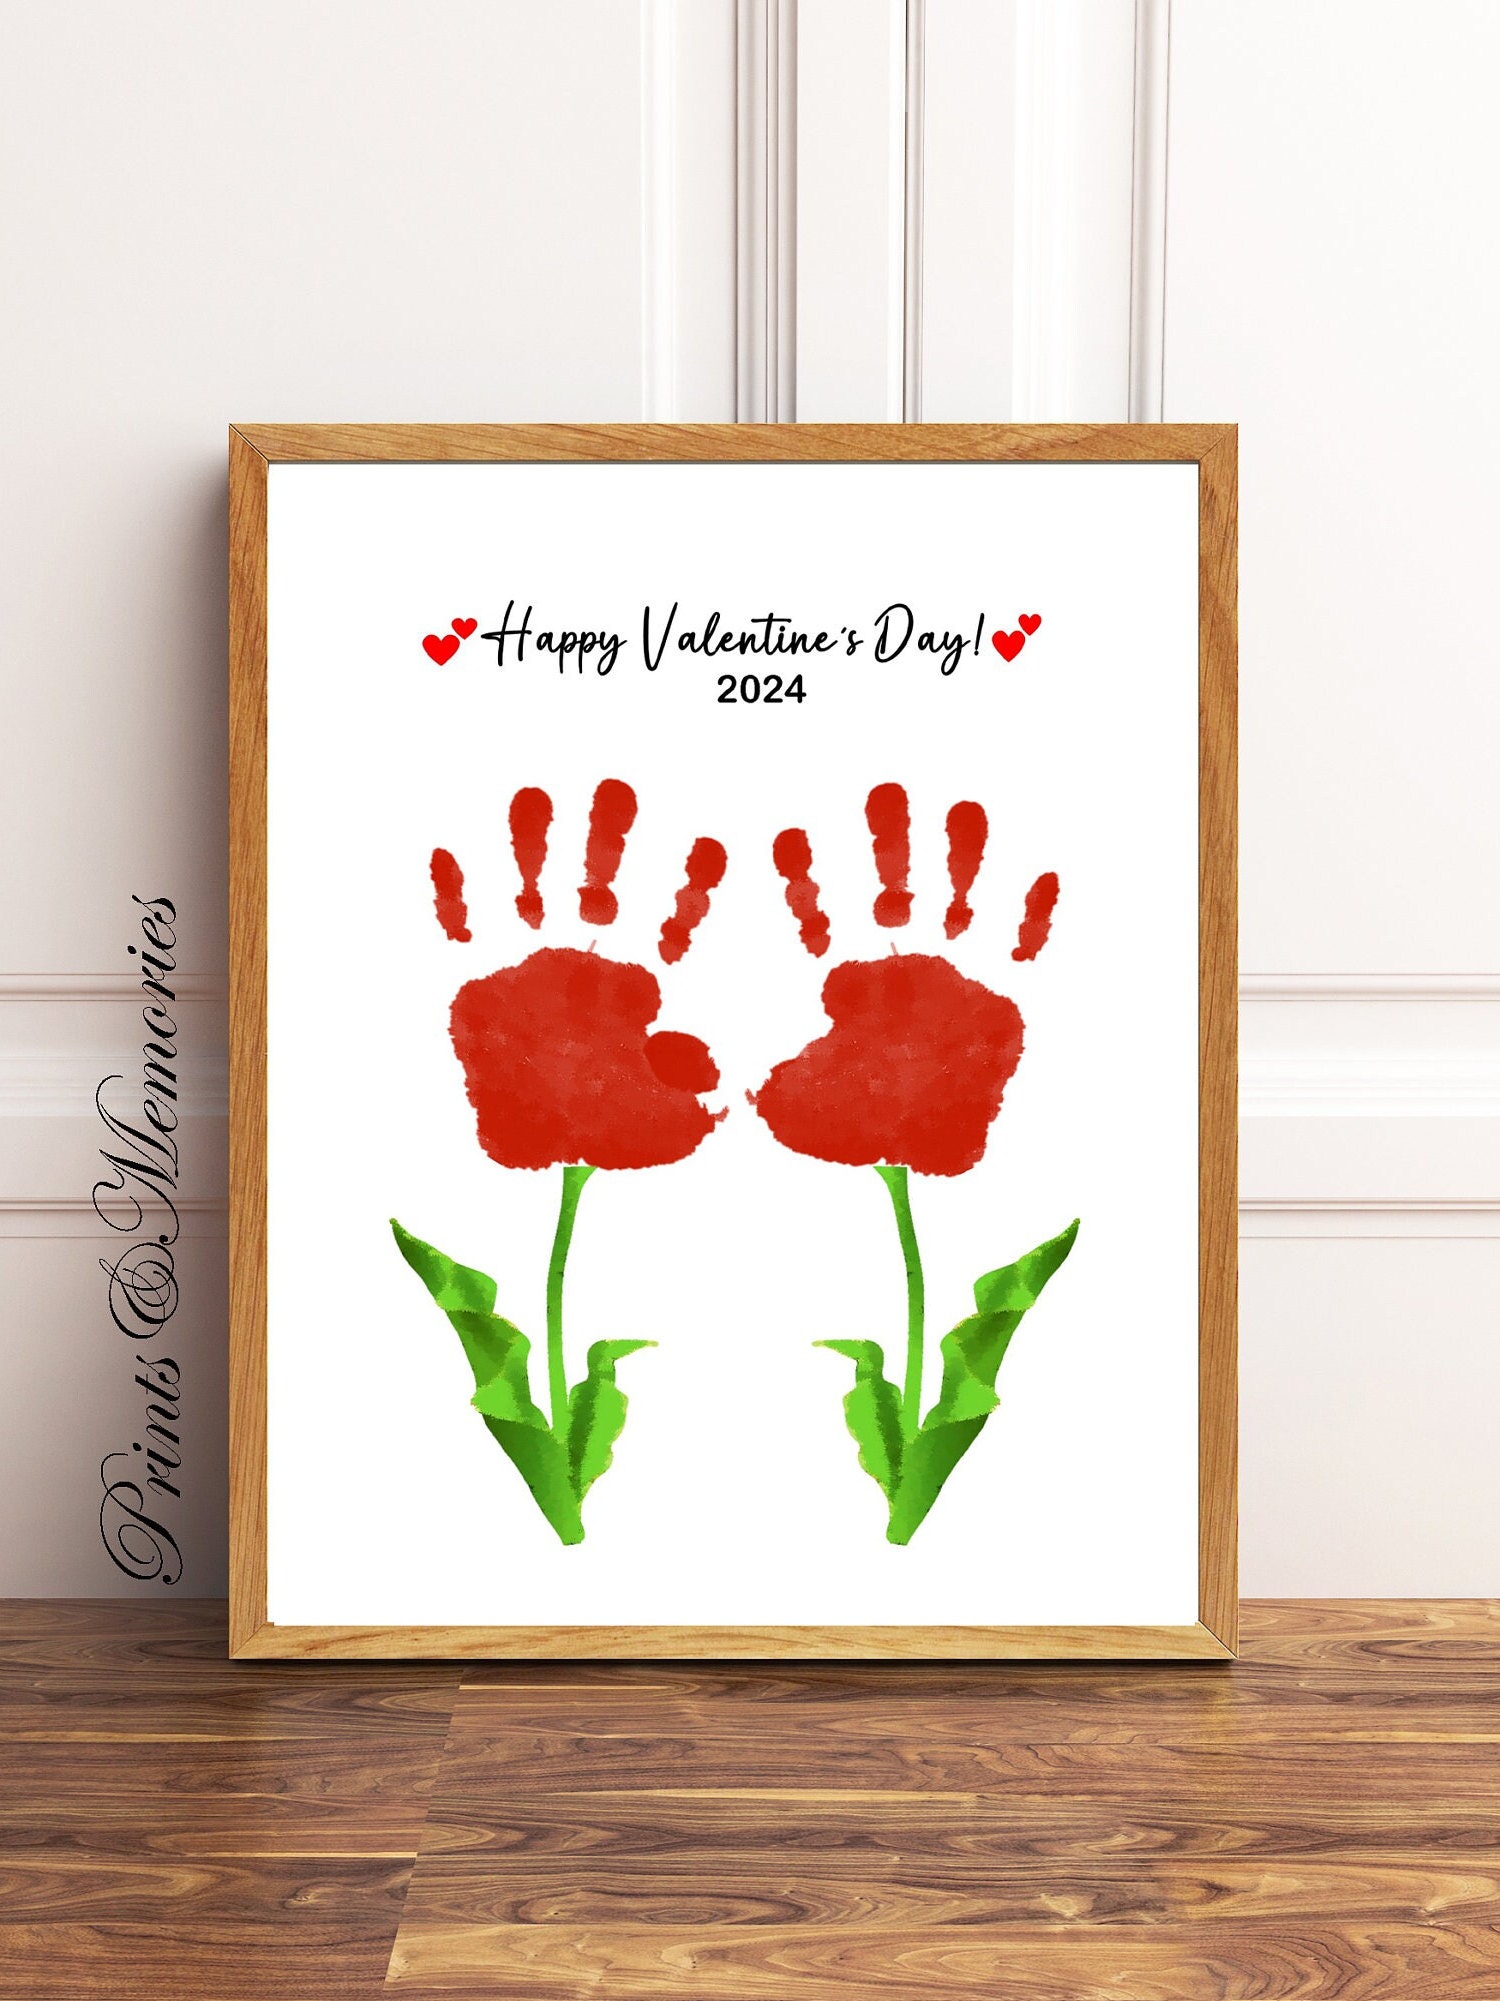 5 Kids Hand Print Valentine Craft Ideas • The Pinning Mama